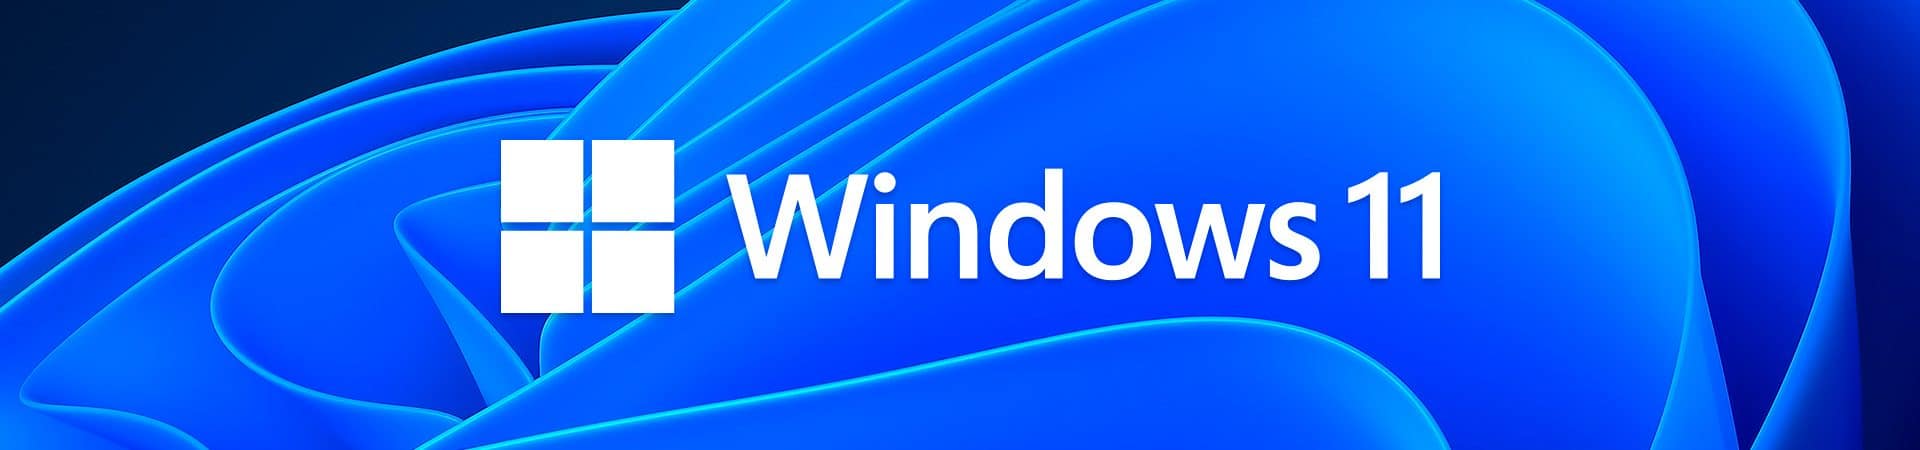 Windows-11-Logo-1920x450